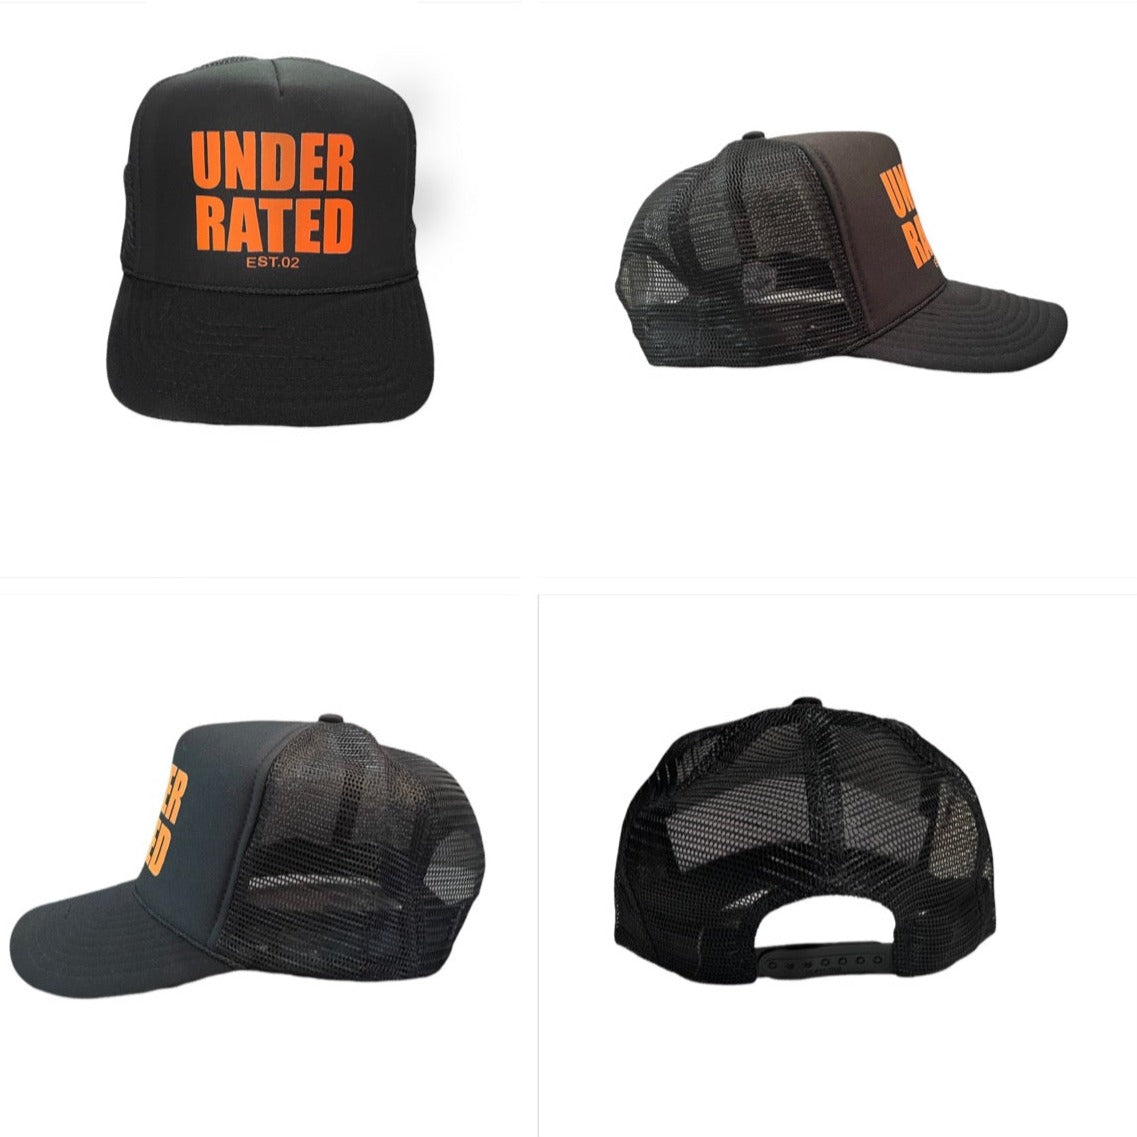 BLACK UNDERRATED TRUCKER HAT WITH ORANGE FONT